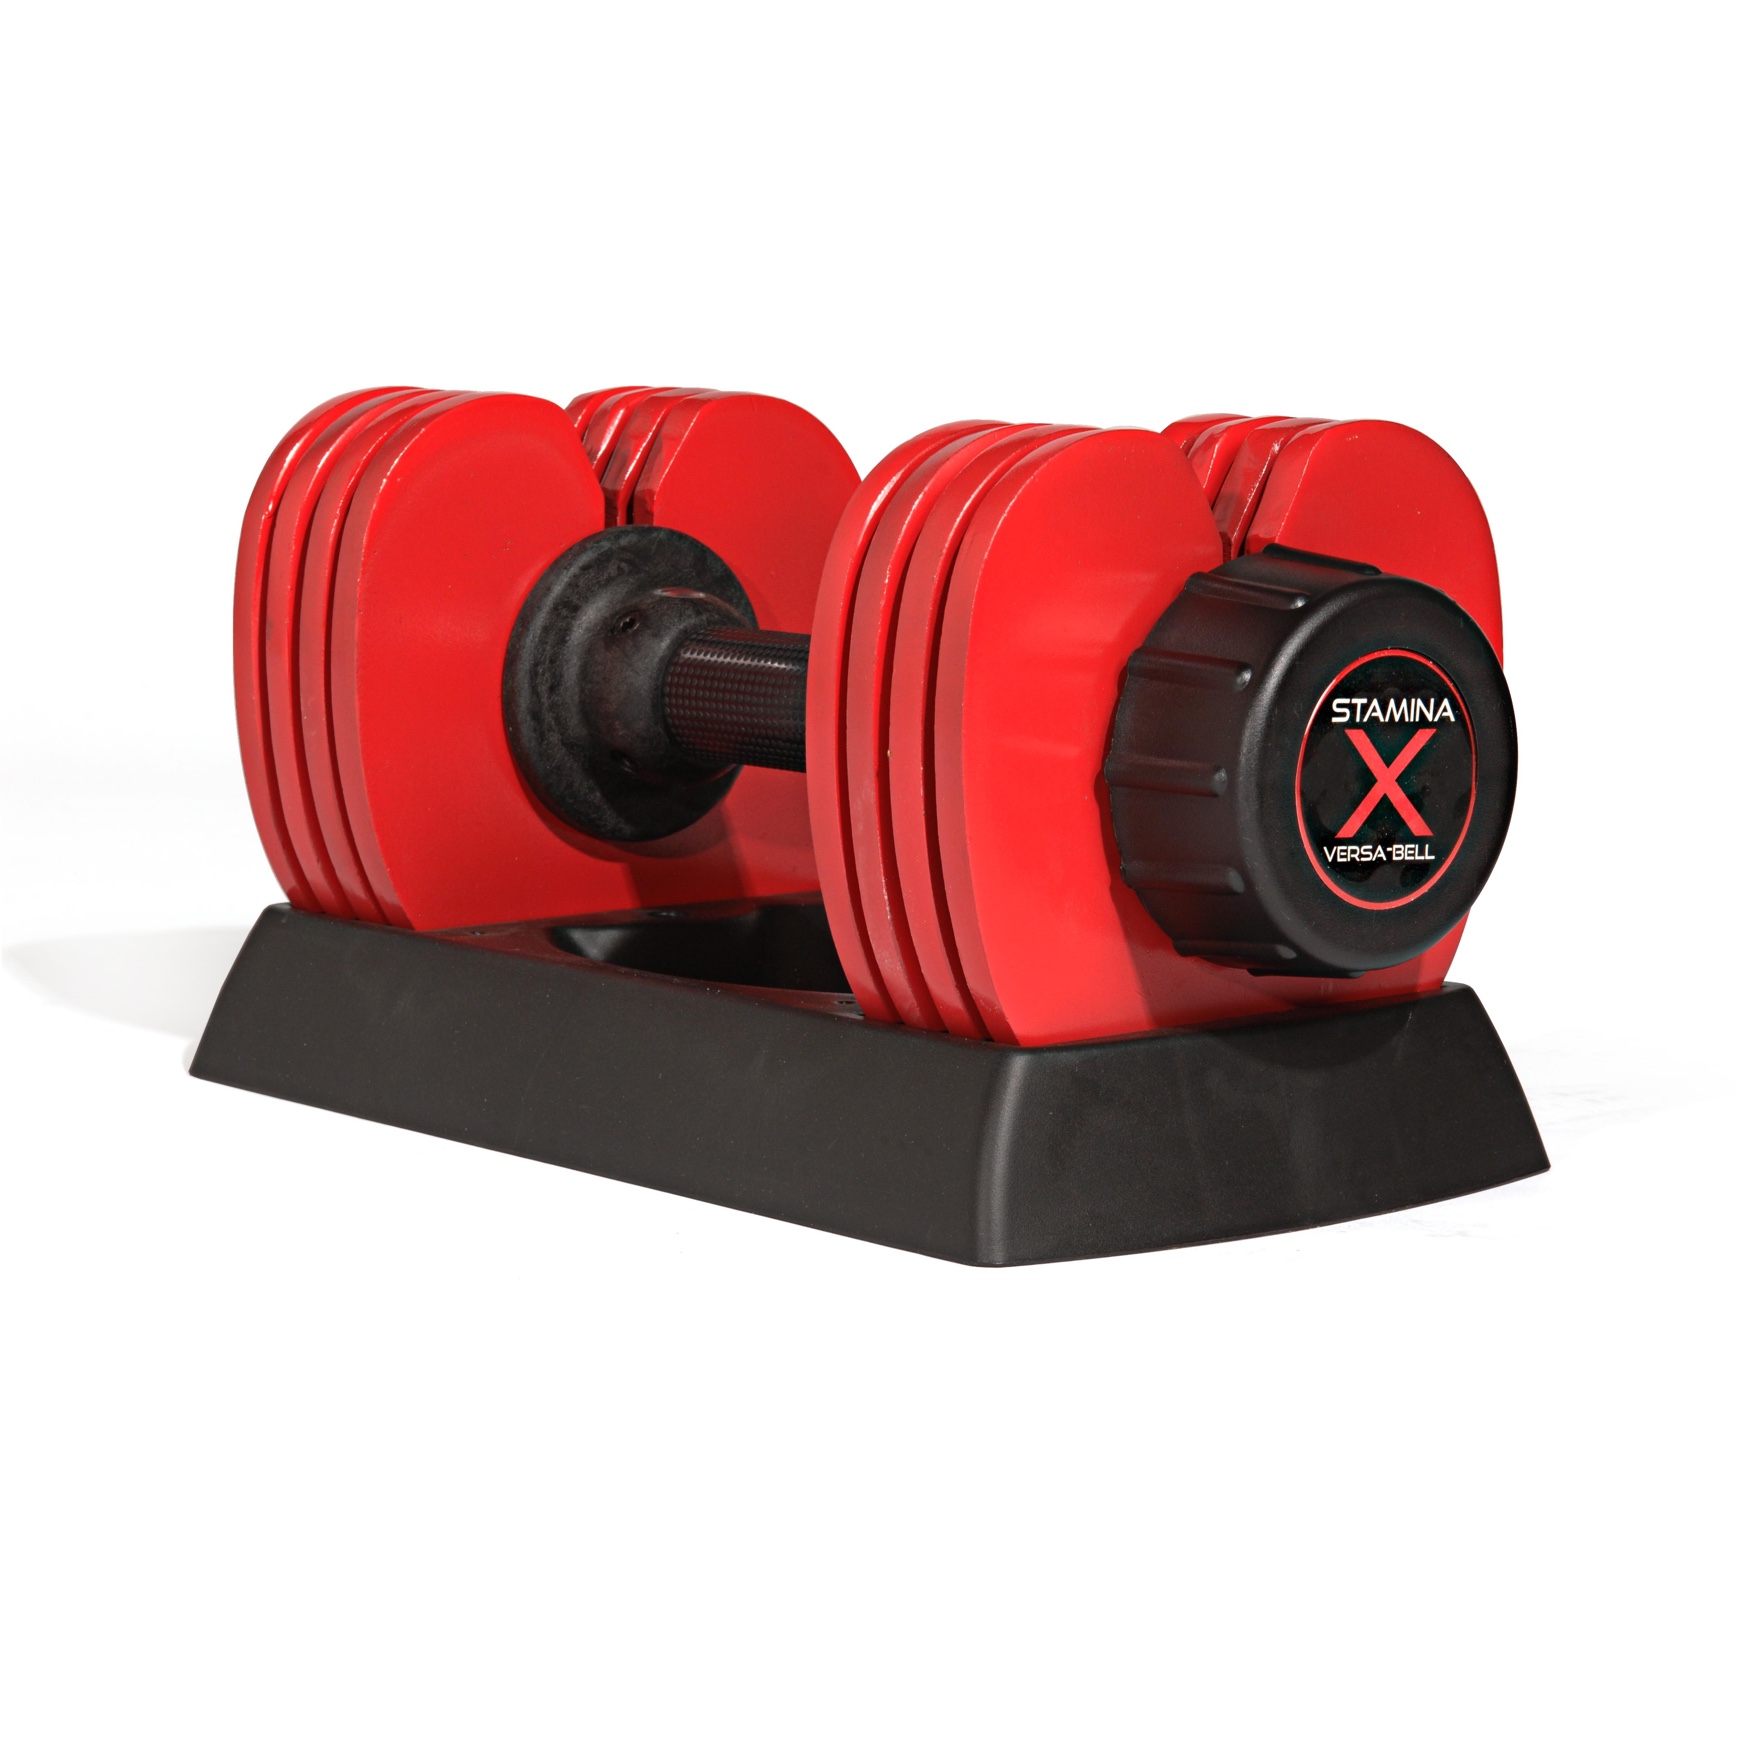 Stamina X Versa Bell(50lb)(1 Dumbbell), RED BLACK